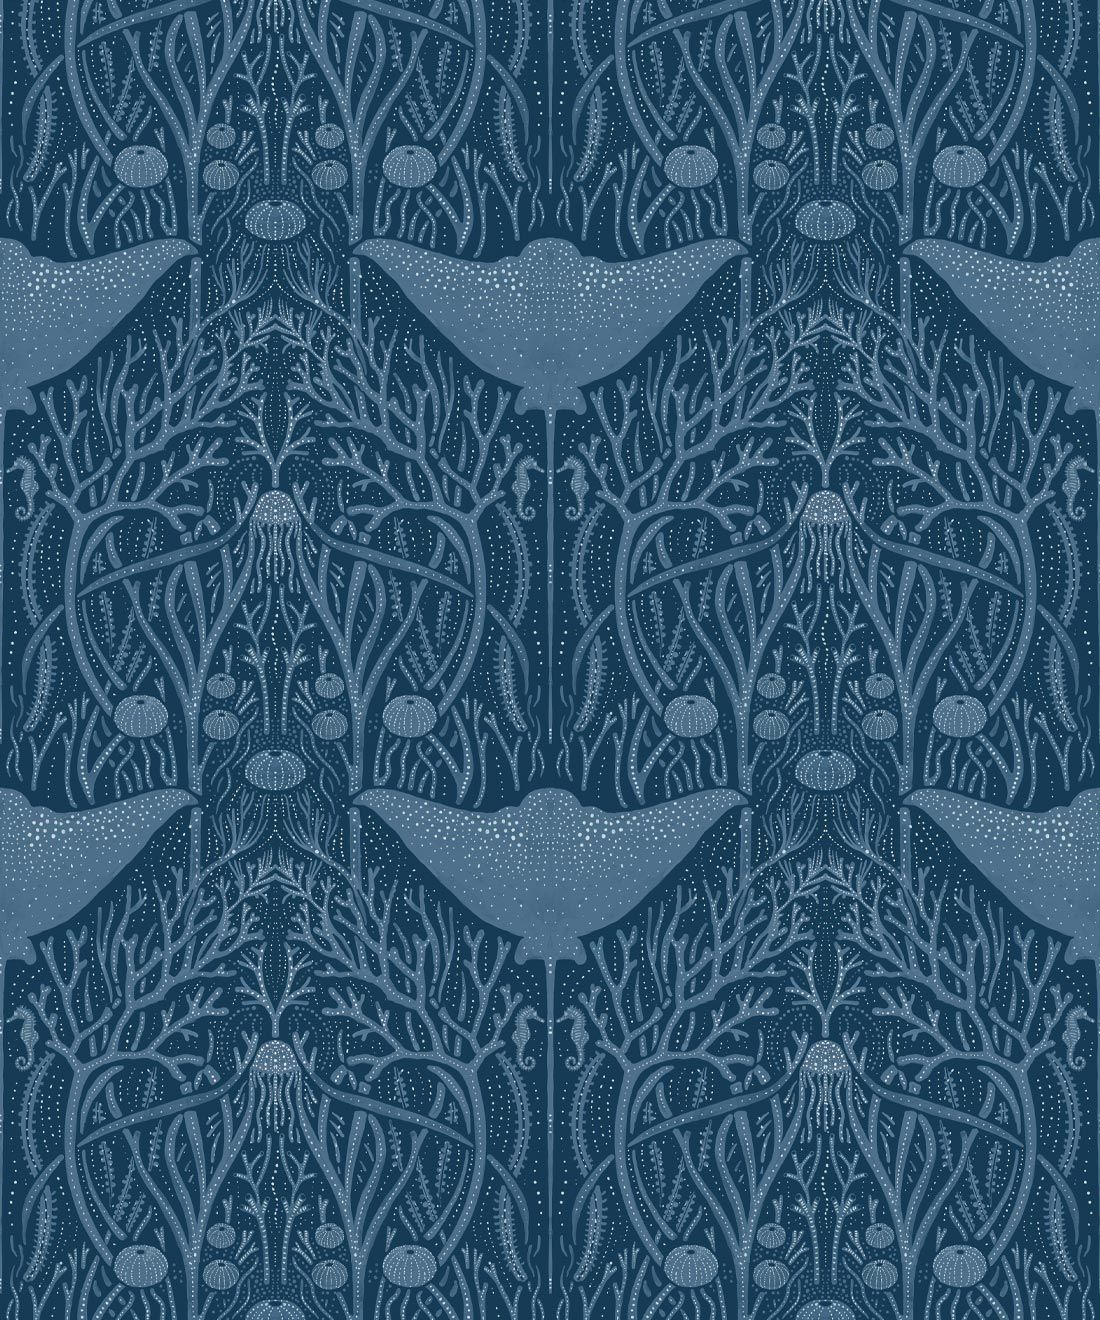 Manta Ray Wallpaper • Floral Wallpaper • Blue • Swatch